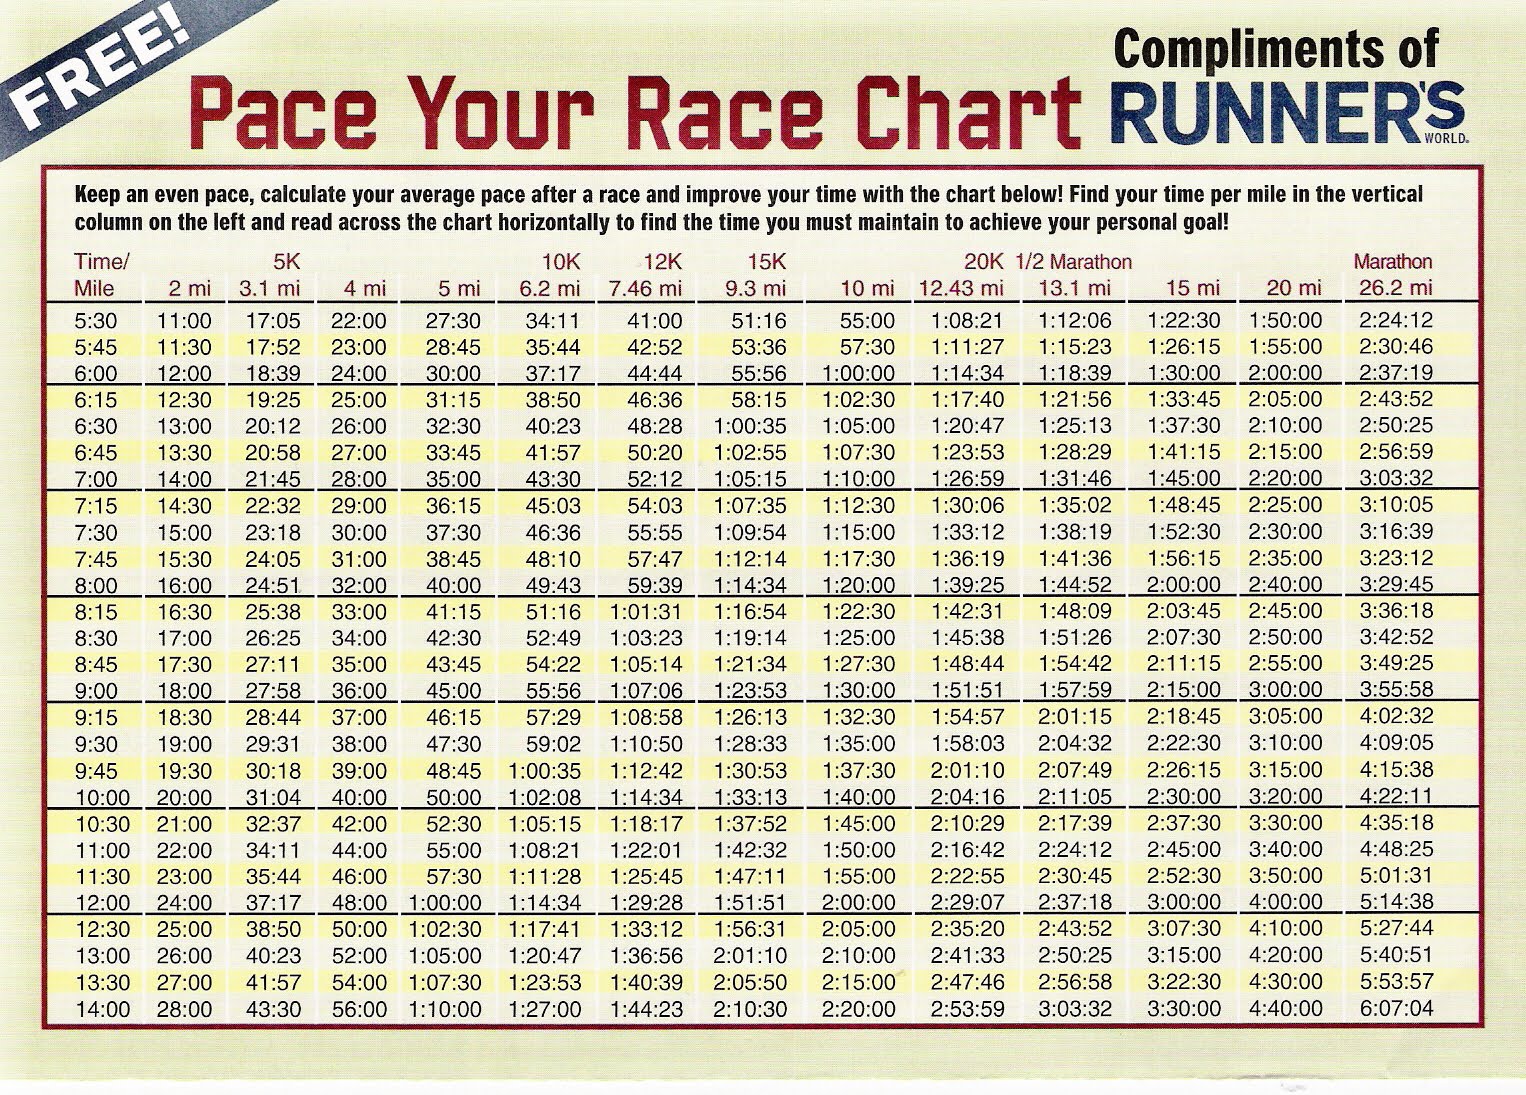 convert marathon time to pace